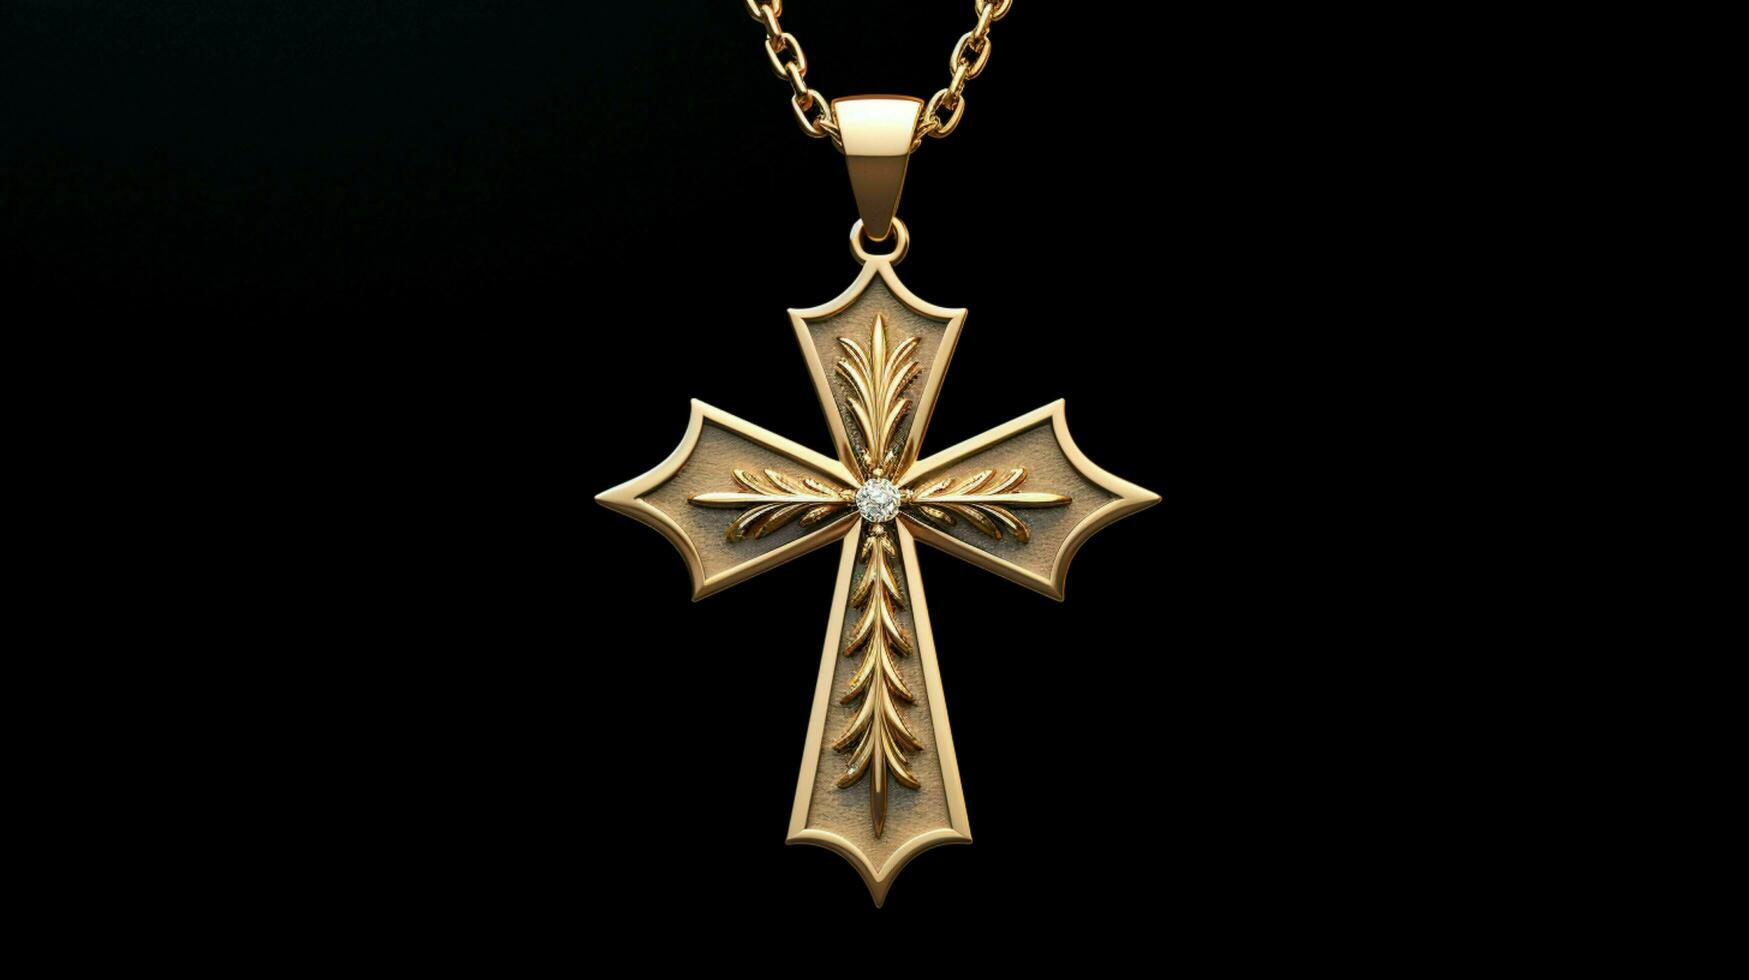 kristendomen symbol de korsa halsband lyser guld foto